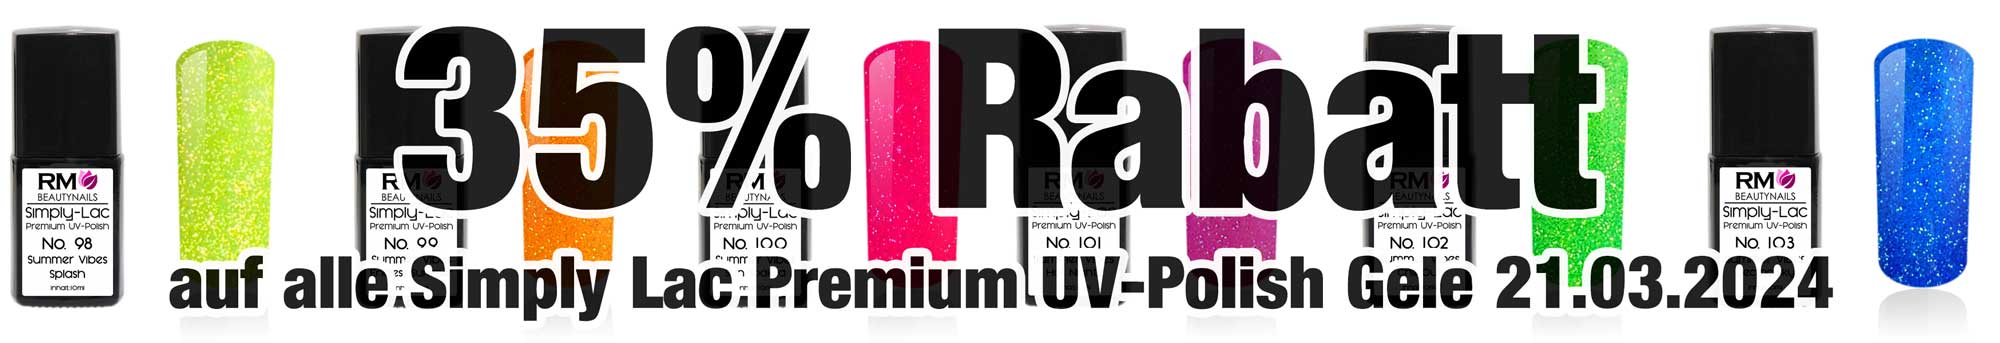 Premium UV-Polish